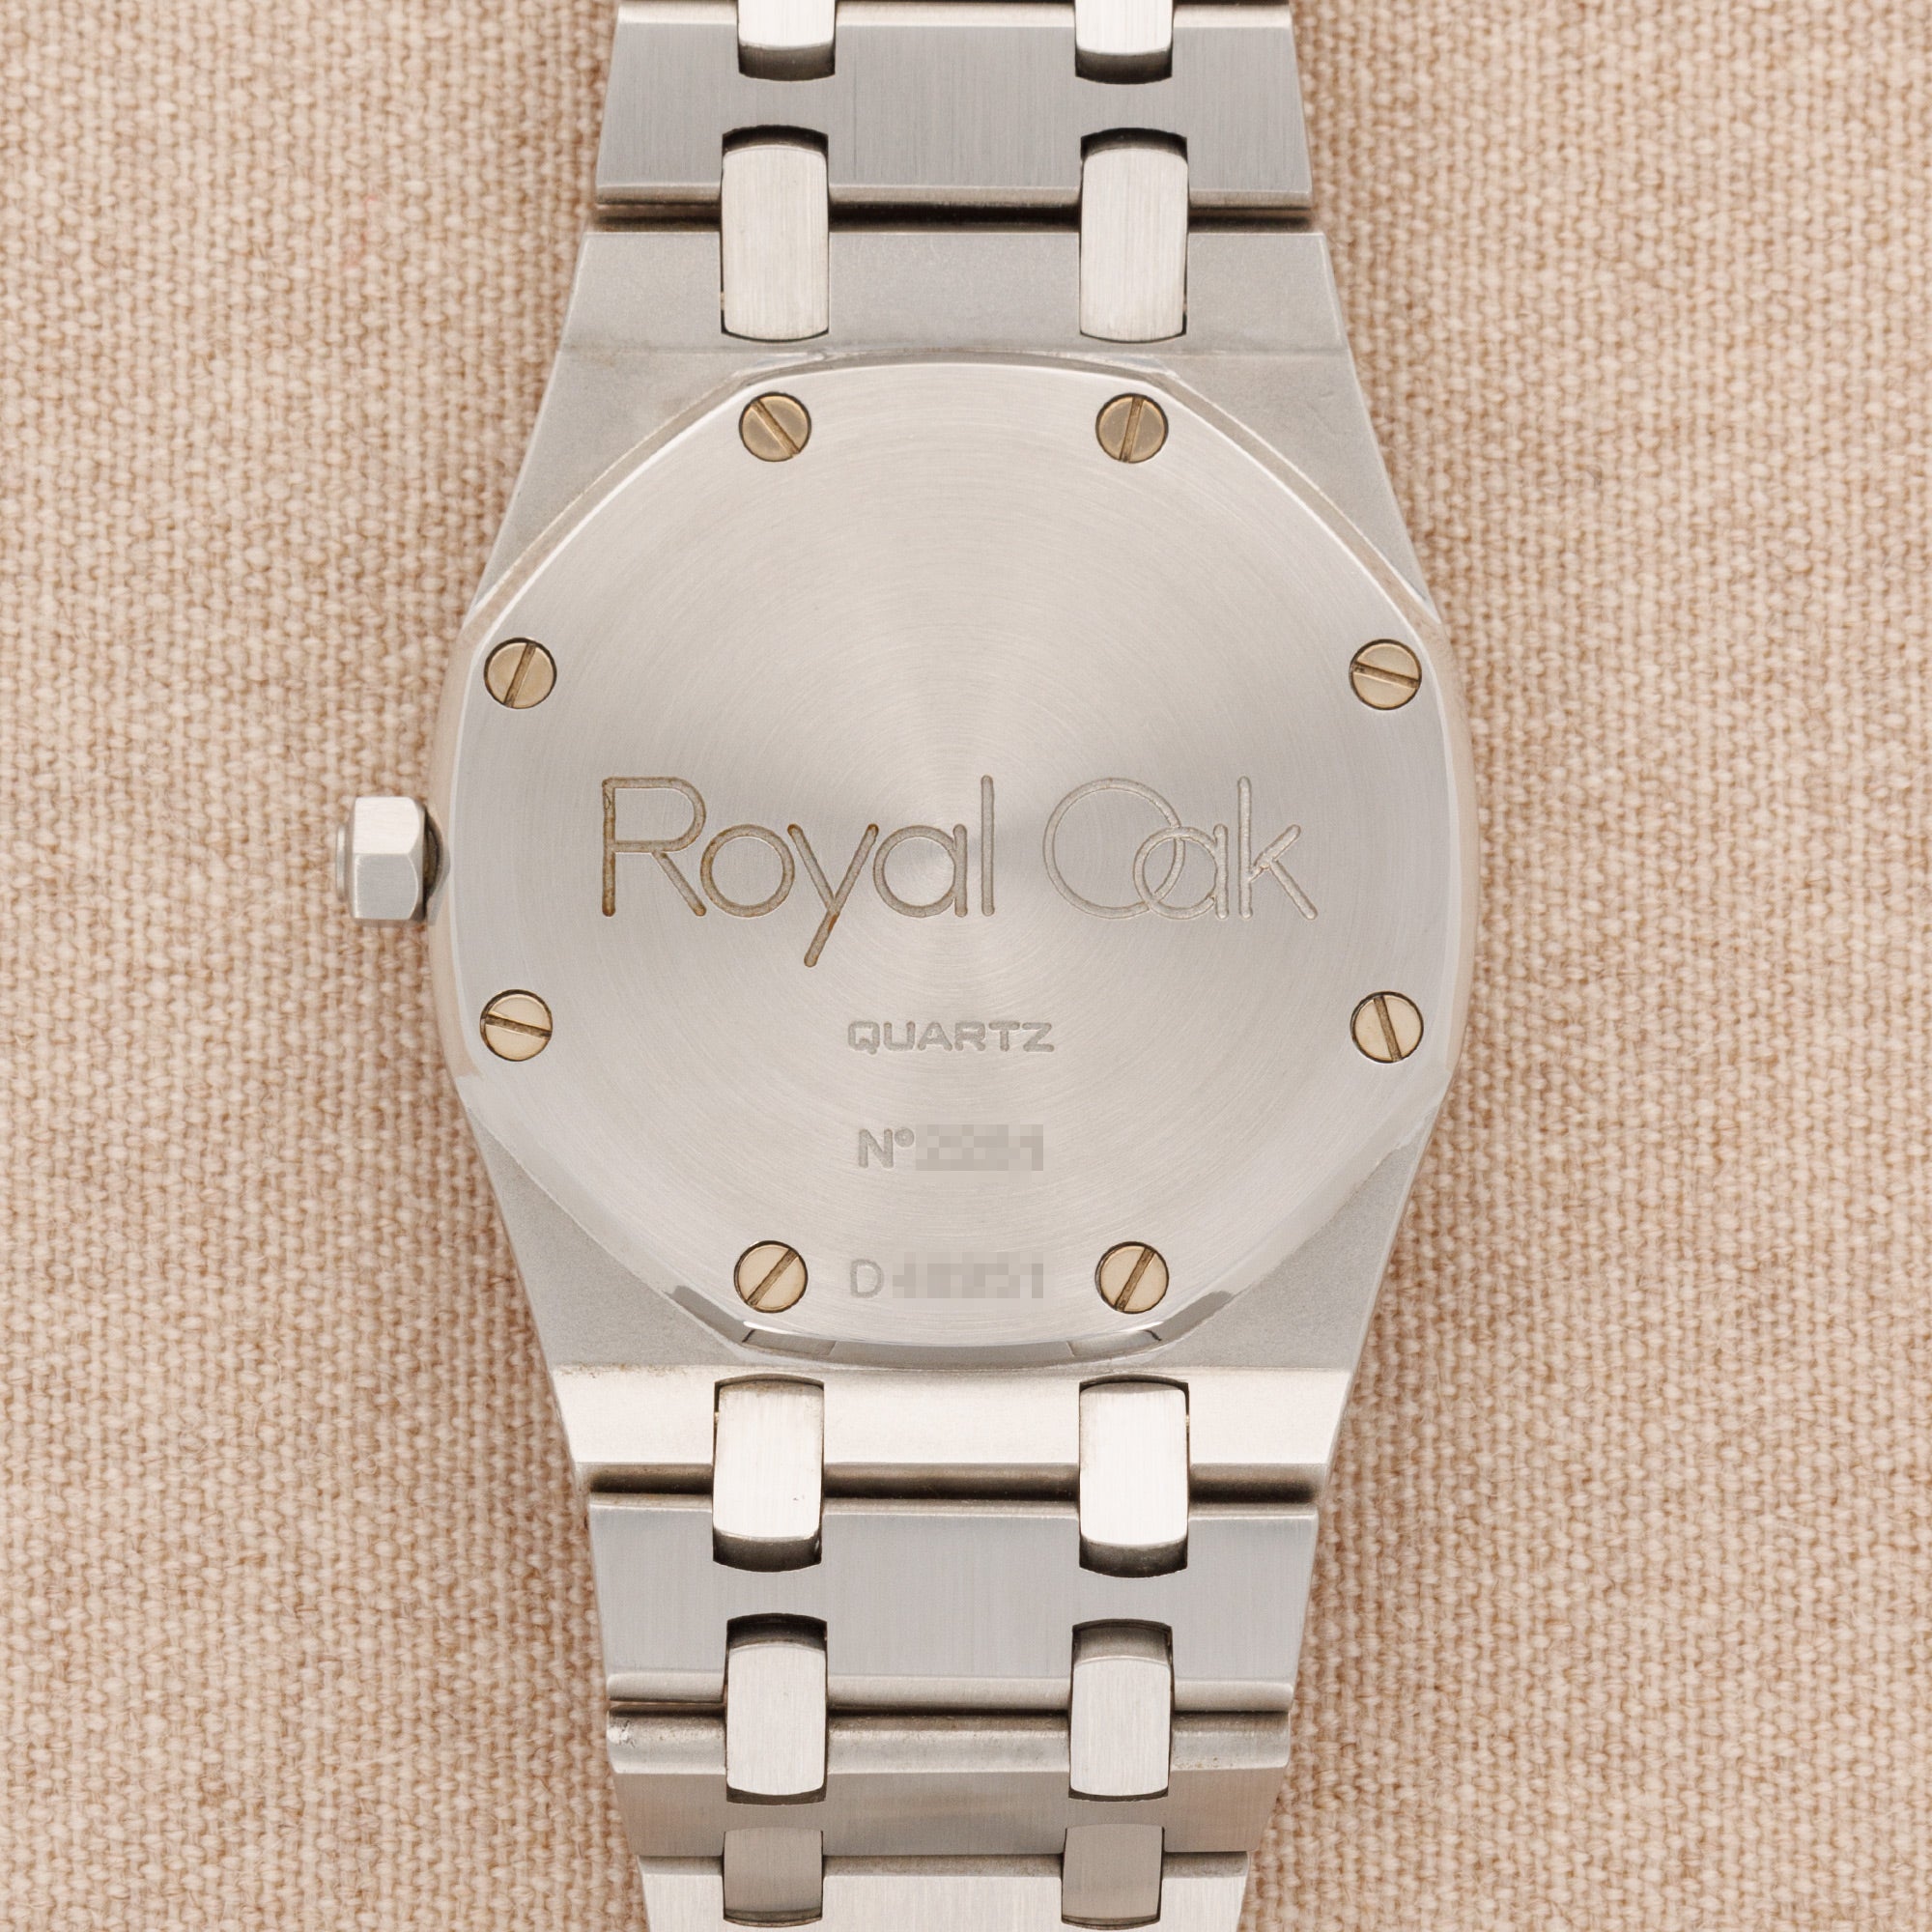 Audemars Piguet - Audemars Piguet Royal Oak Ref. 56303 with Tropical Dial - The Keystone Watches